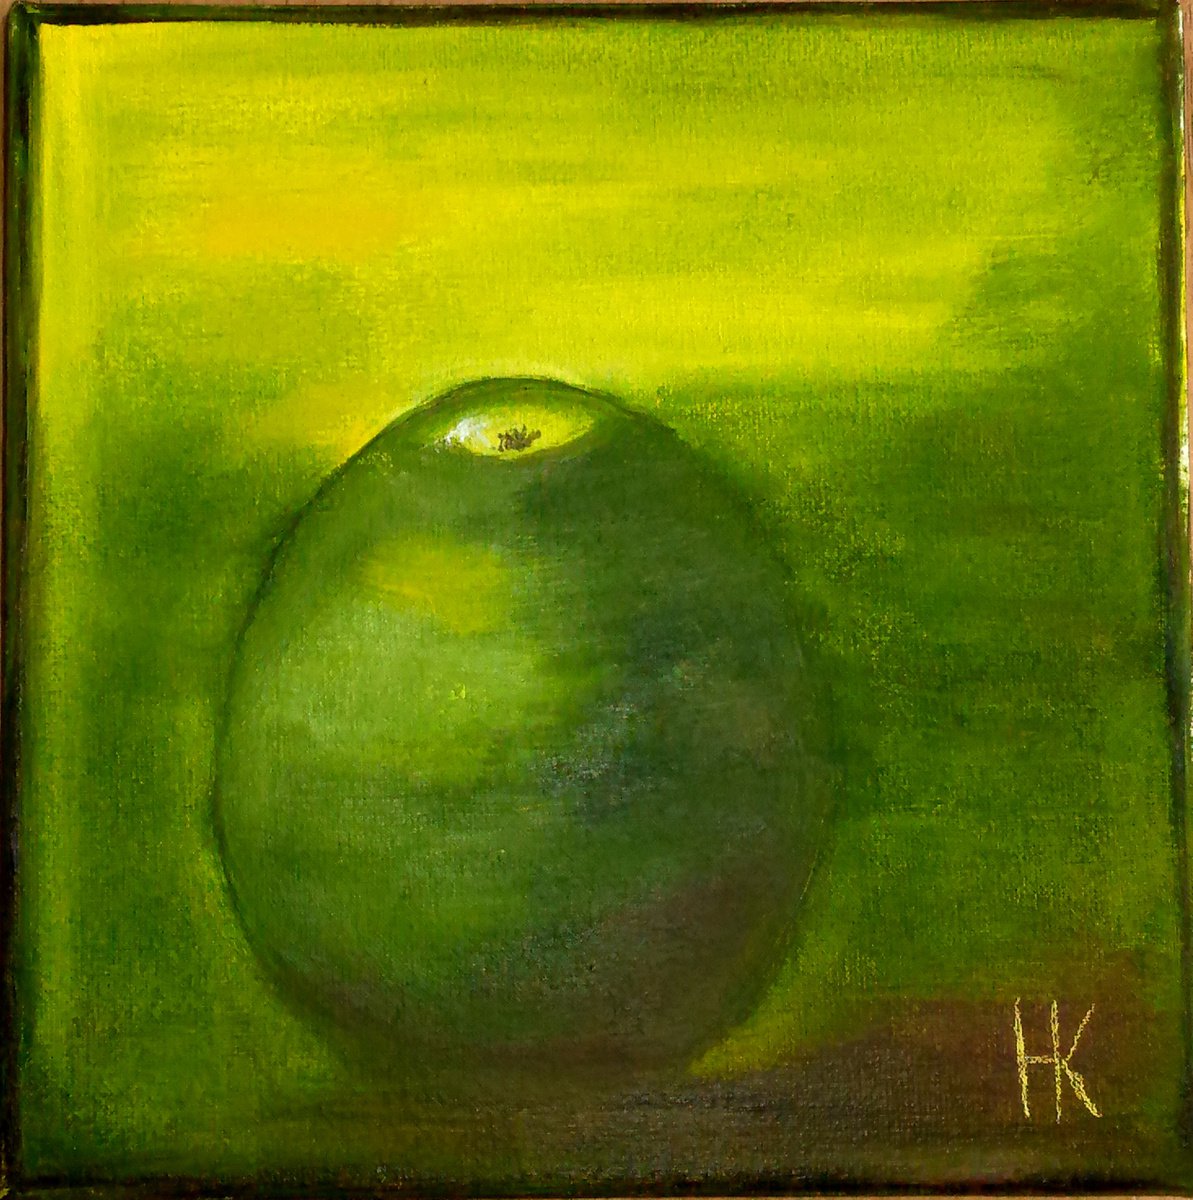 Apple Painting Fruit Original Art Green Apple Small Still Life Canvas Artwork Ready to Han... by Halyna Kirichenko